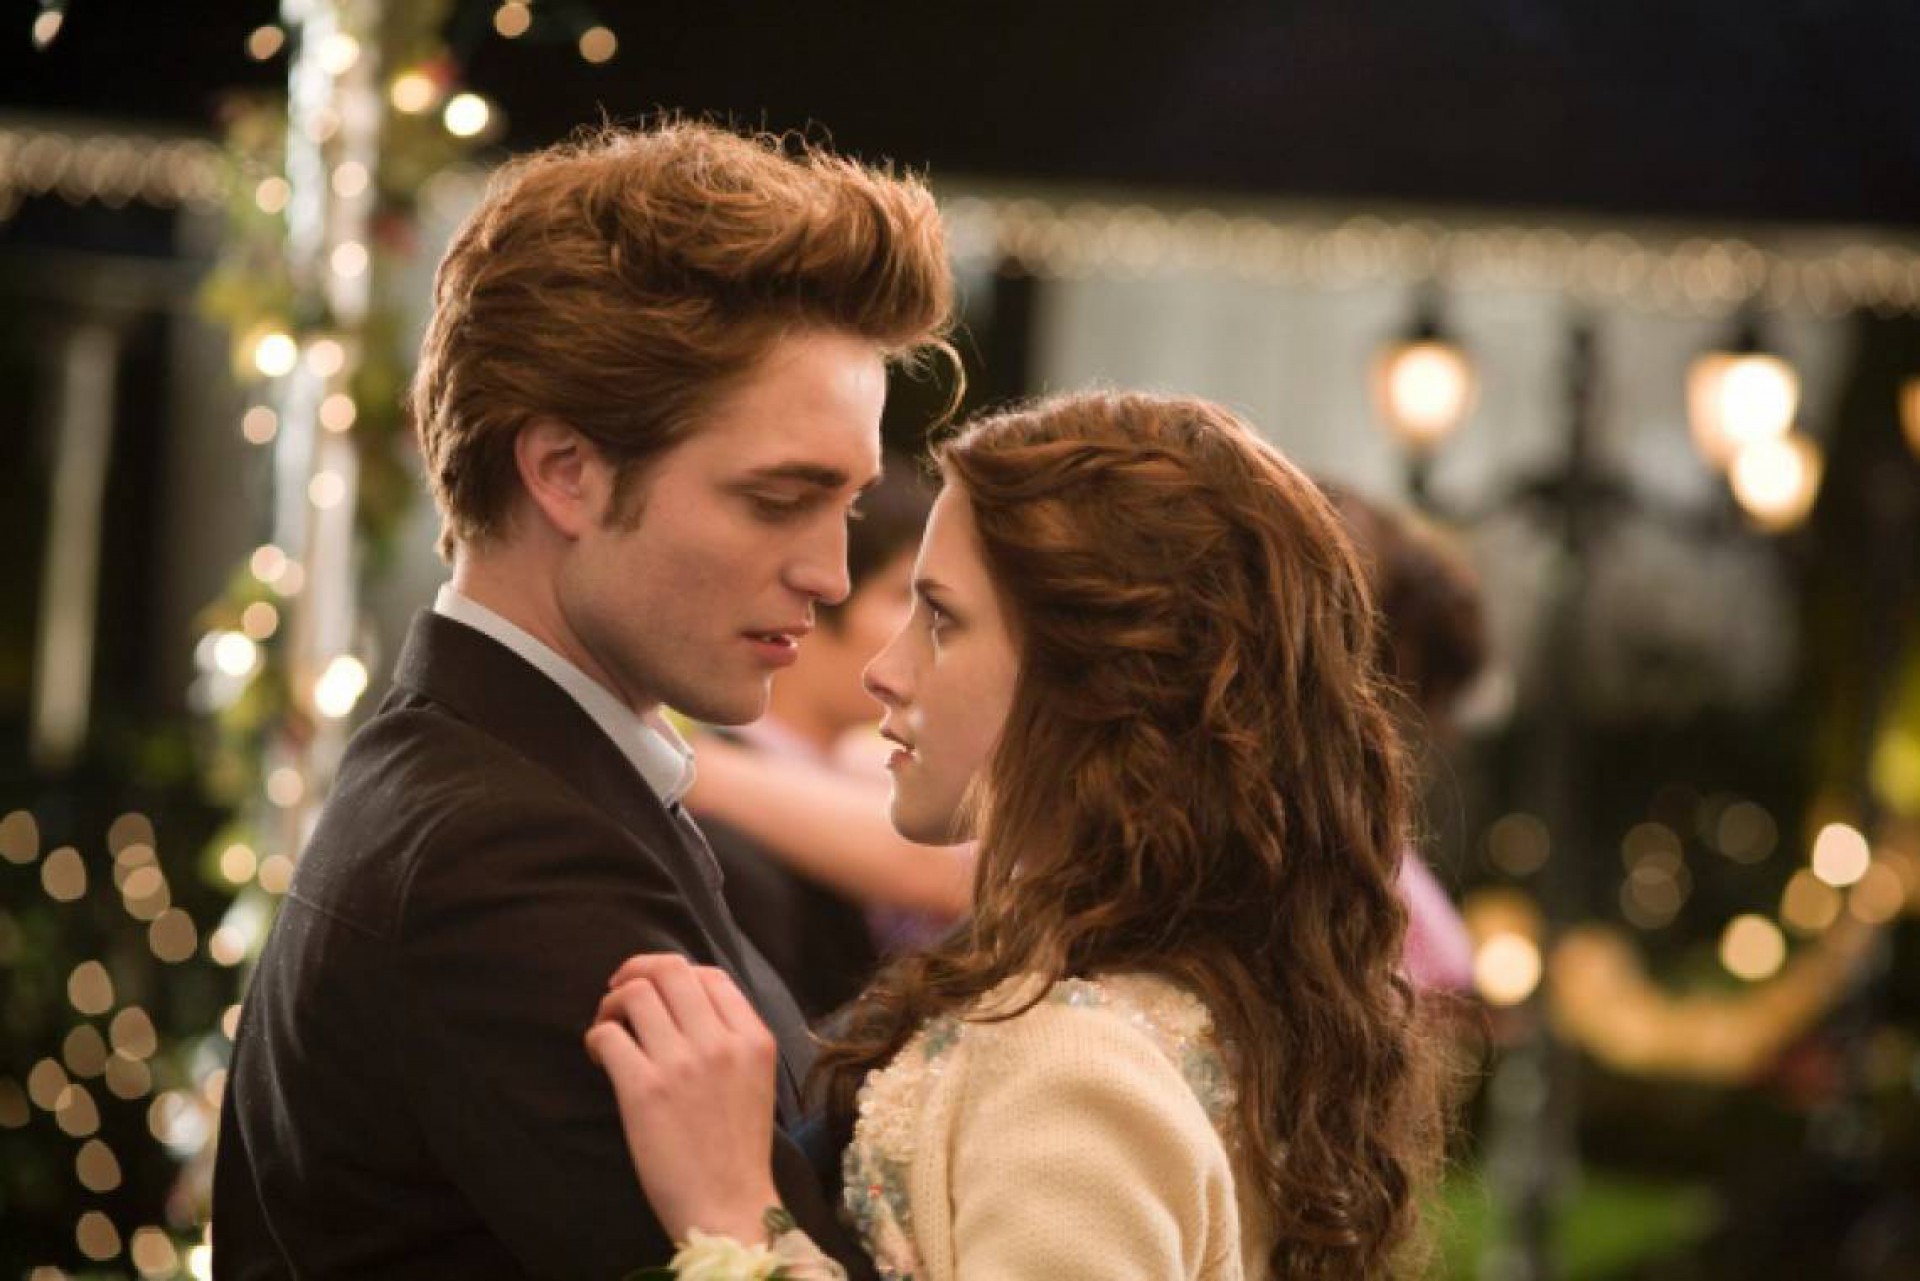 All 'Twilight' saga films will be available on Globoplay